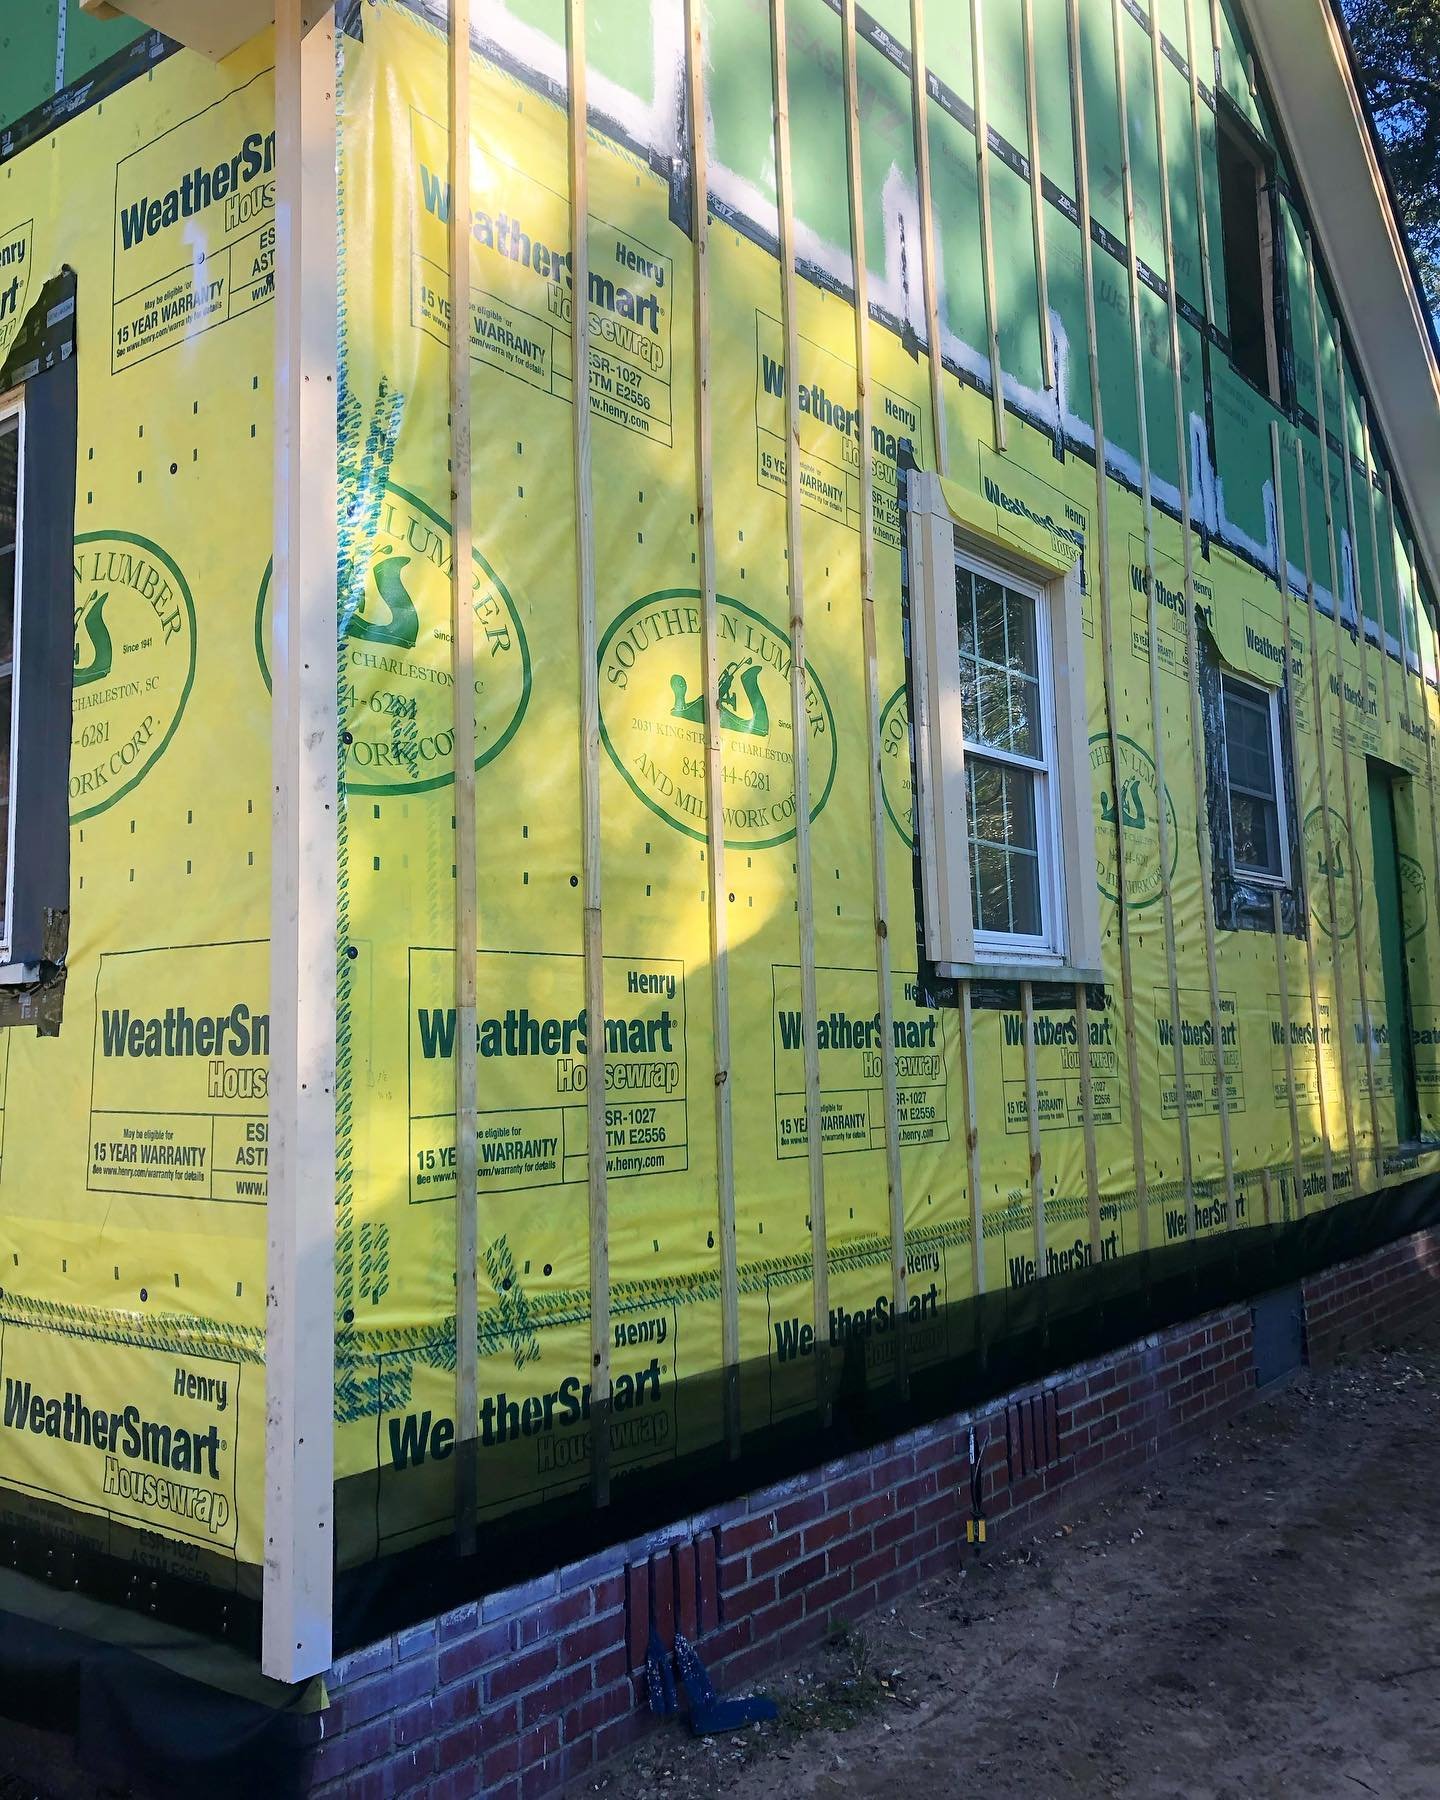 Rain screen installation💦

.
.
.
.
.
.
.
.
.
.
.
.
.
#HamiltonBuildersSC #HamiltonBuildersCHS 
#CharlestonConstruction #CharlestonRenovation #CharlestonBuilders#CharlestonHomeImprovement#CharlestonRemodeling #CharlestonDesignBuild #SCConstruction #S